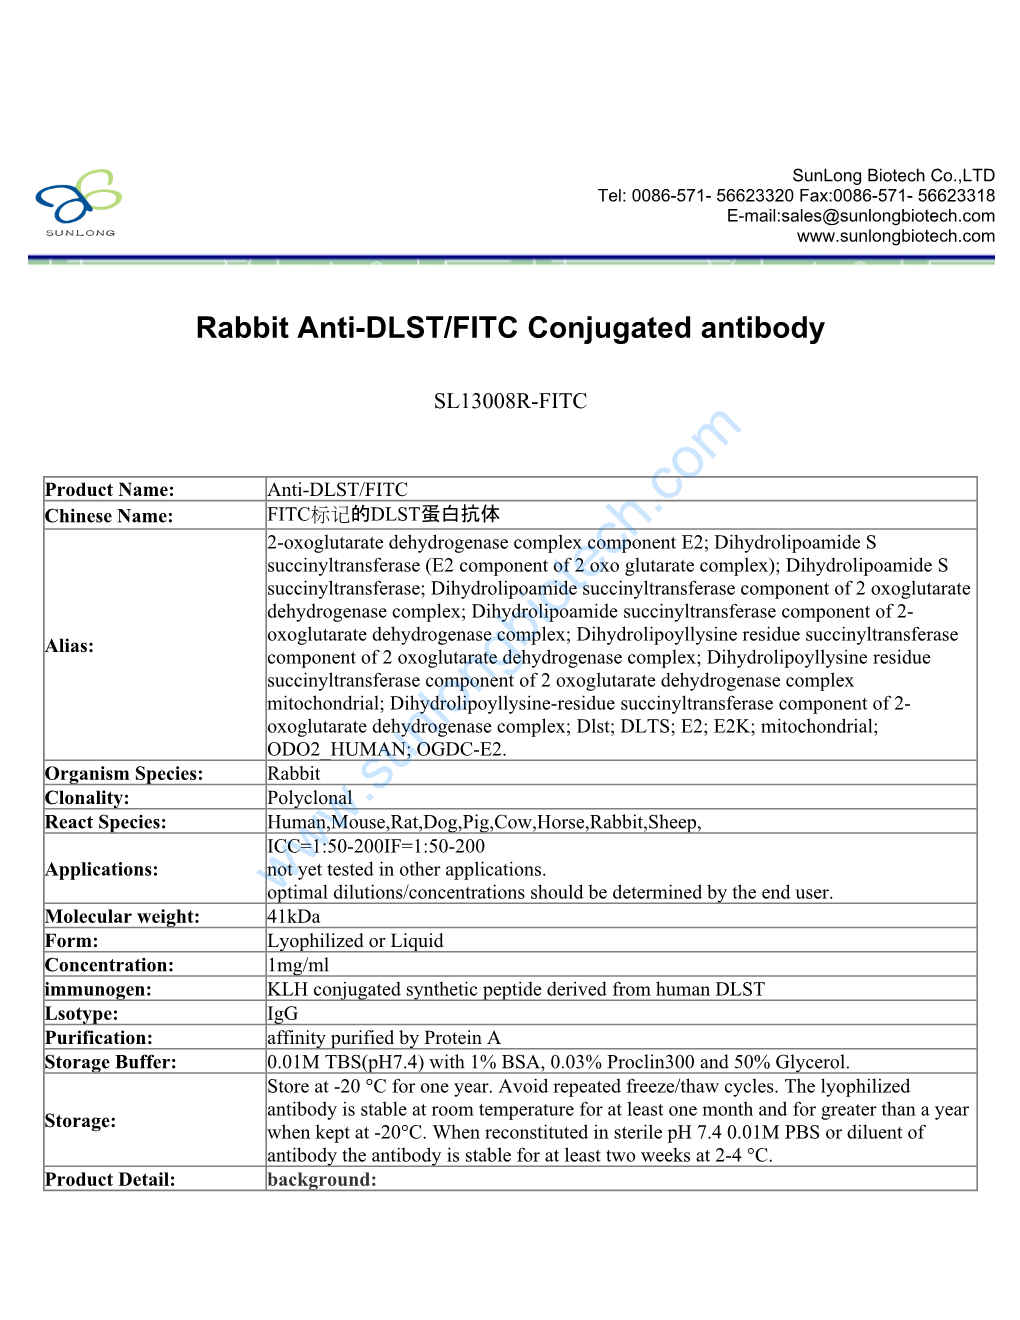 Rabbit Anti-DLST/FITC Conjugated Antibody-SL13008R-FITC